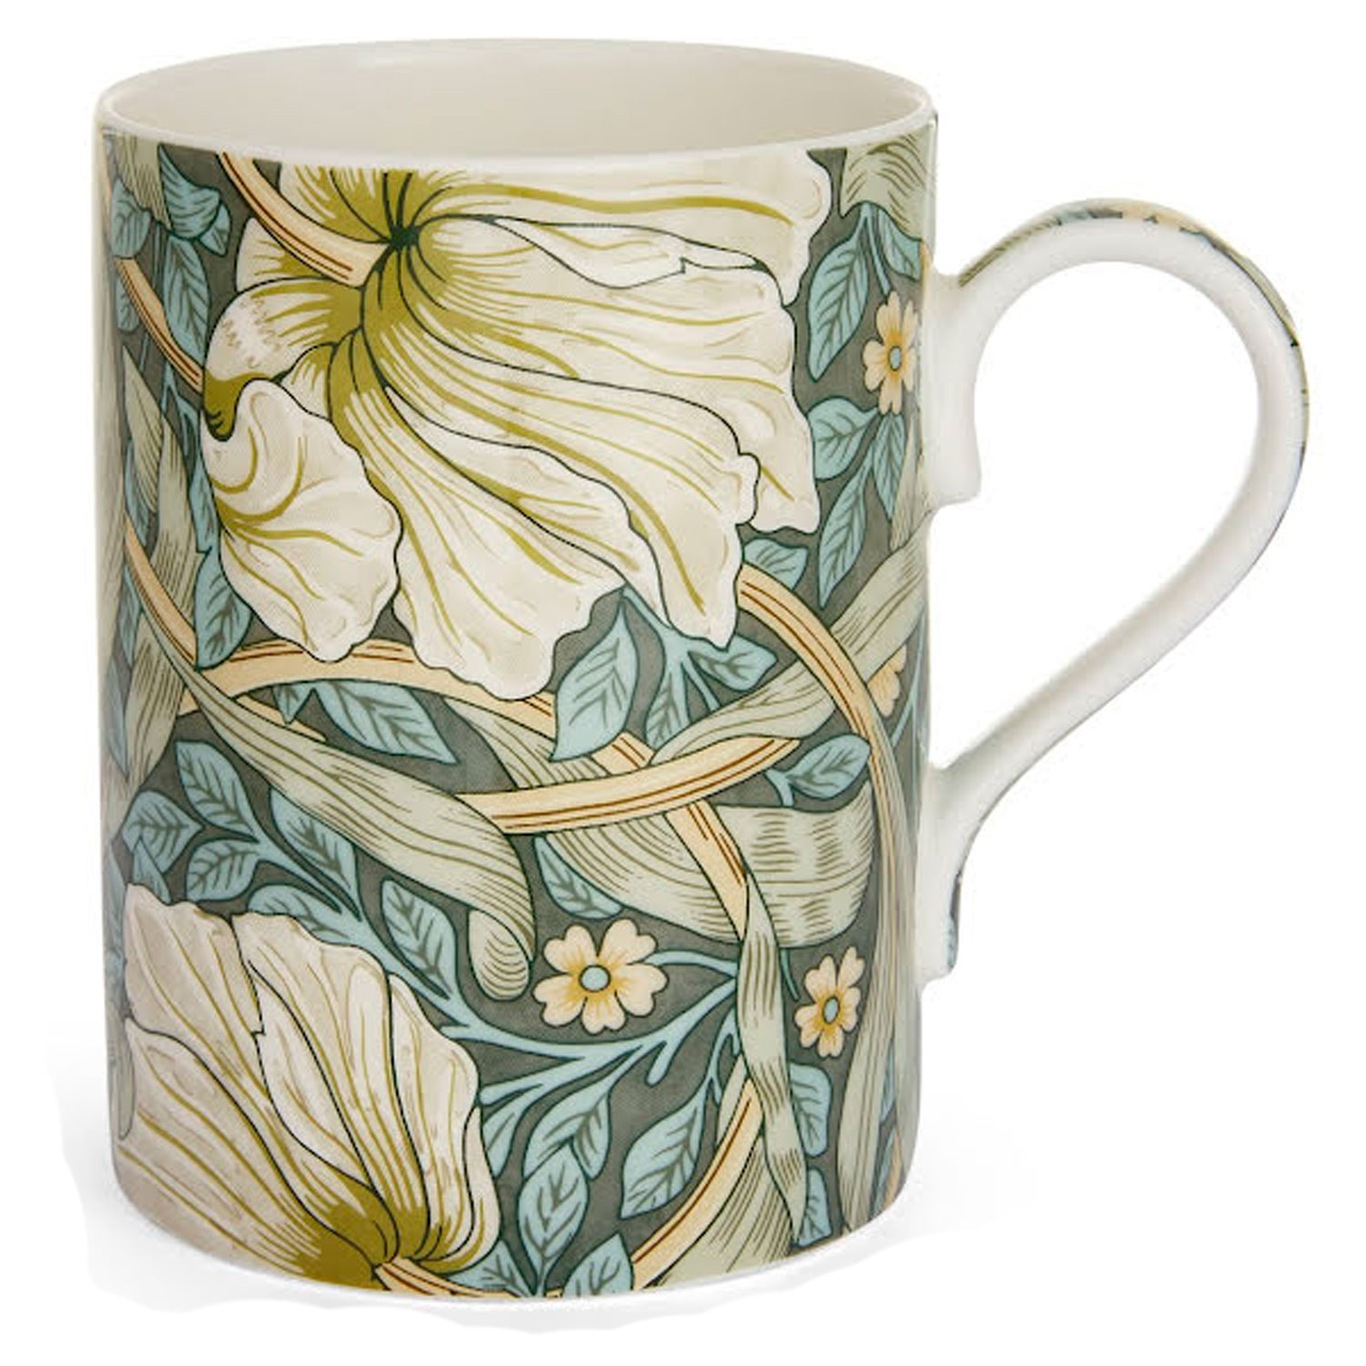 William Morris & Co Mug, Pimpernel/Privet